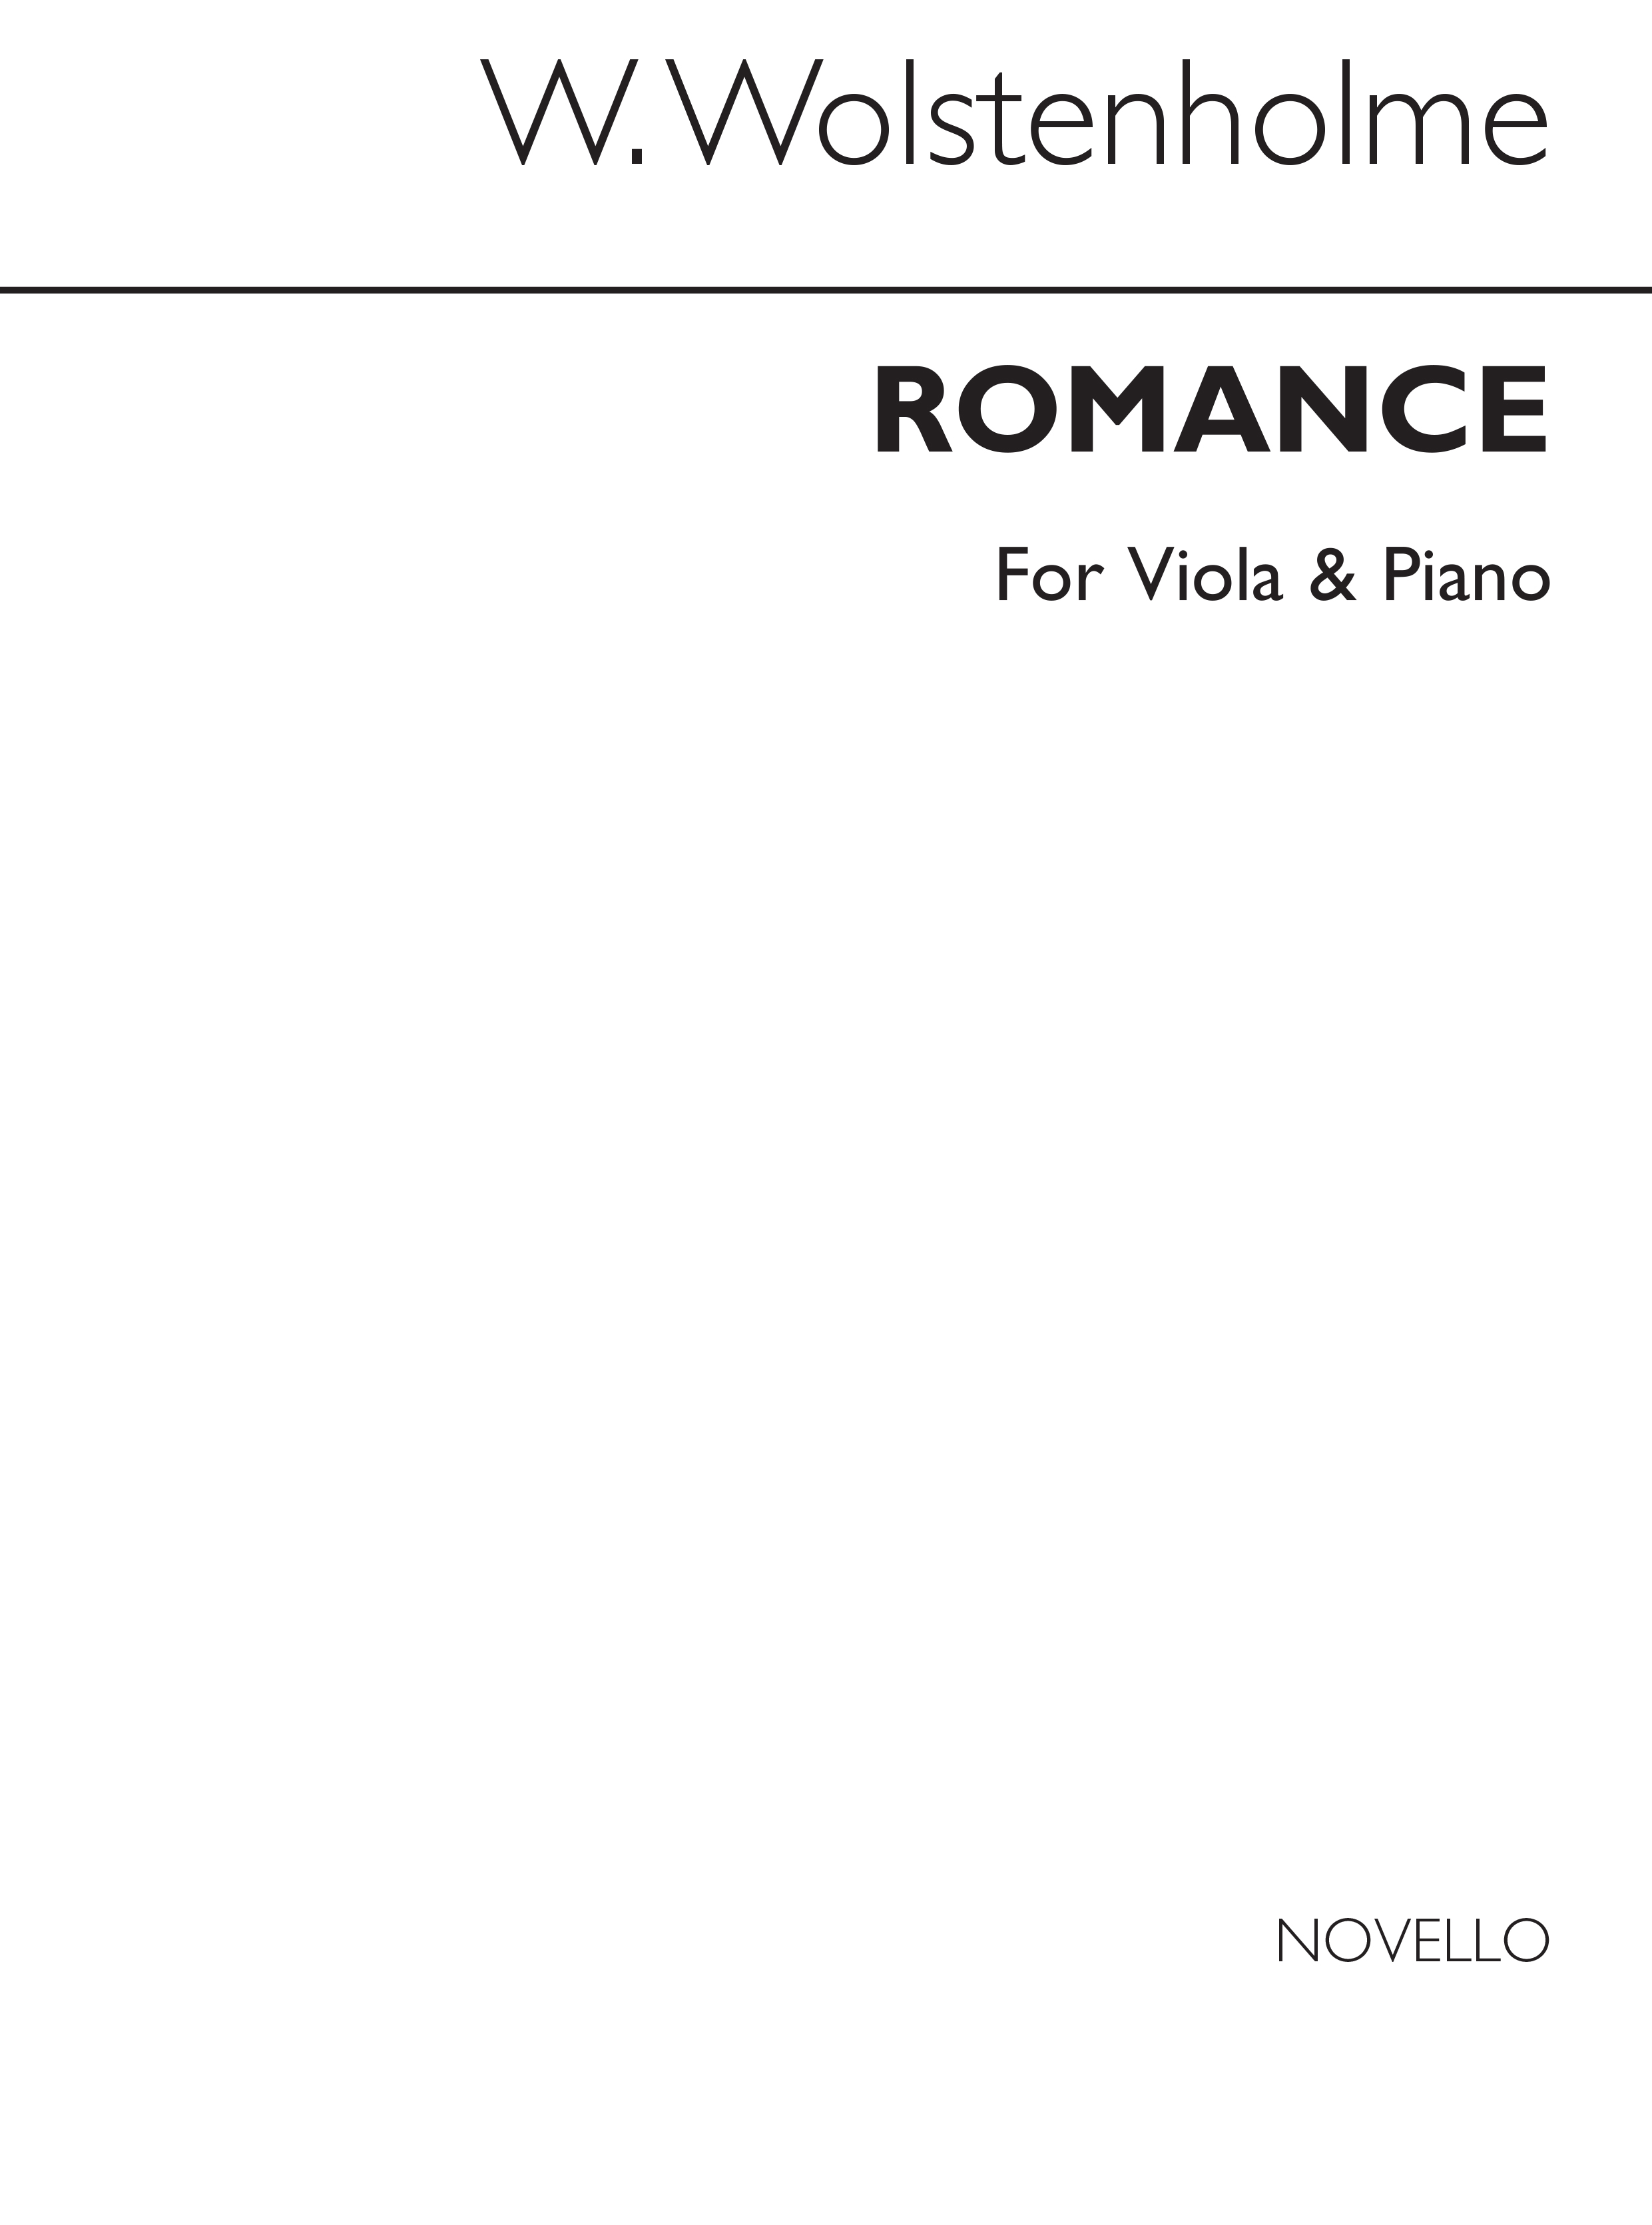 William Wolstenholme: Romance For Viola And Piano